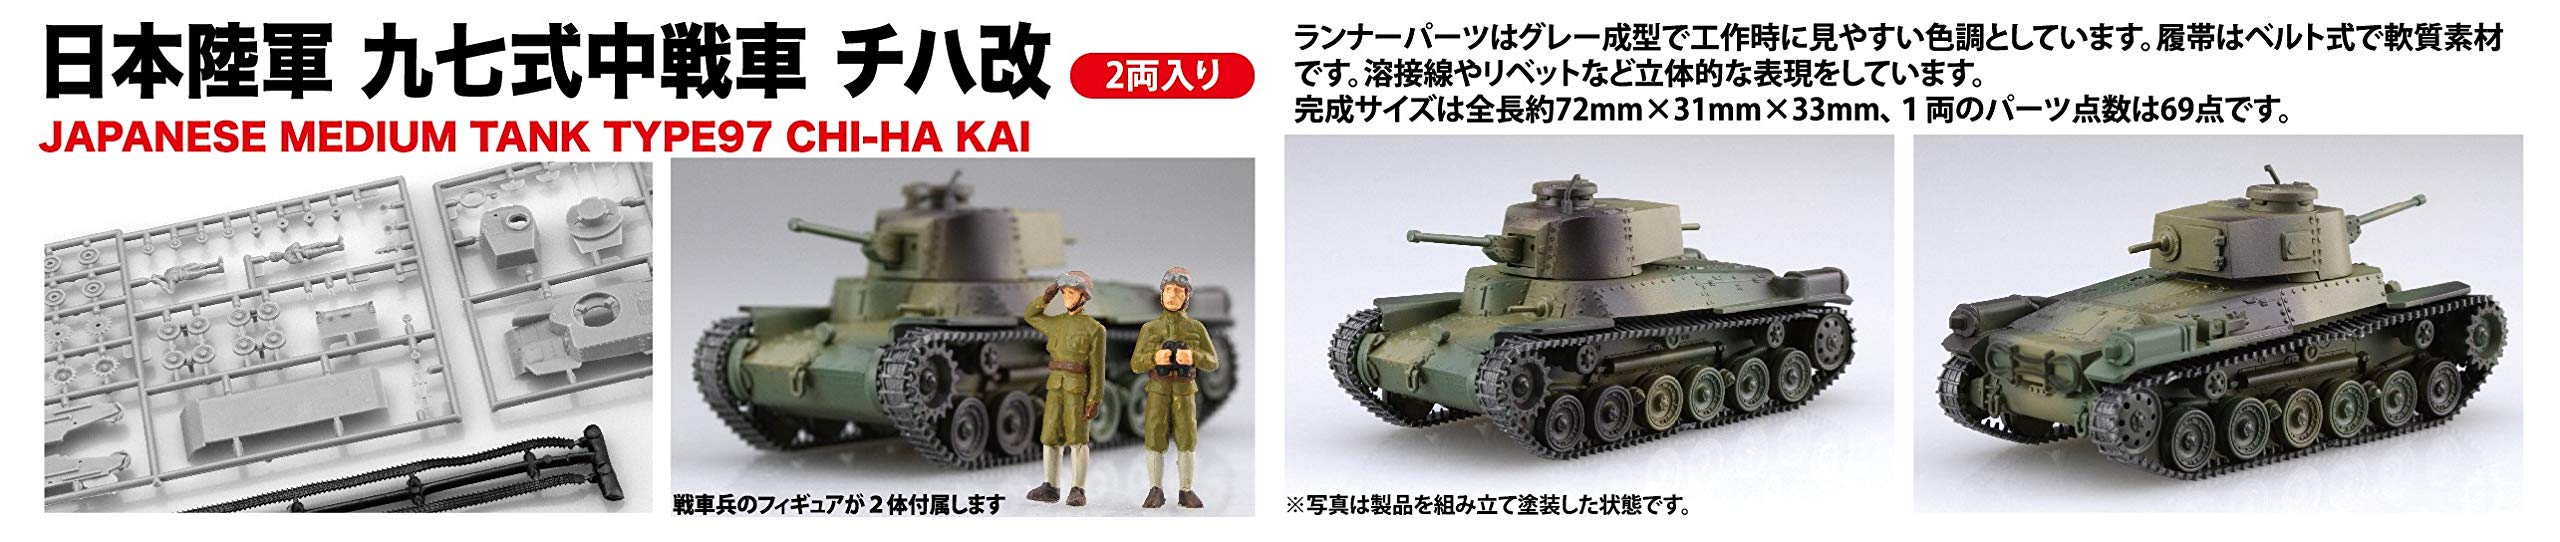 FUJIMI Special World Armor 1/76 Mittlerer Panzer Typ 97 Chi-Ha Kai 2-teilige Spezialversion mit Infanterie-Kunststoffmodell